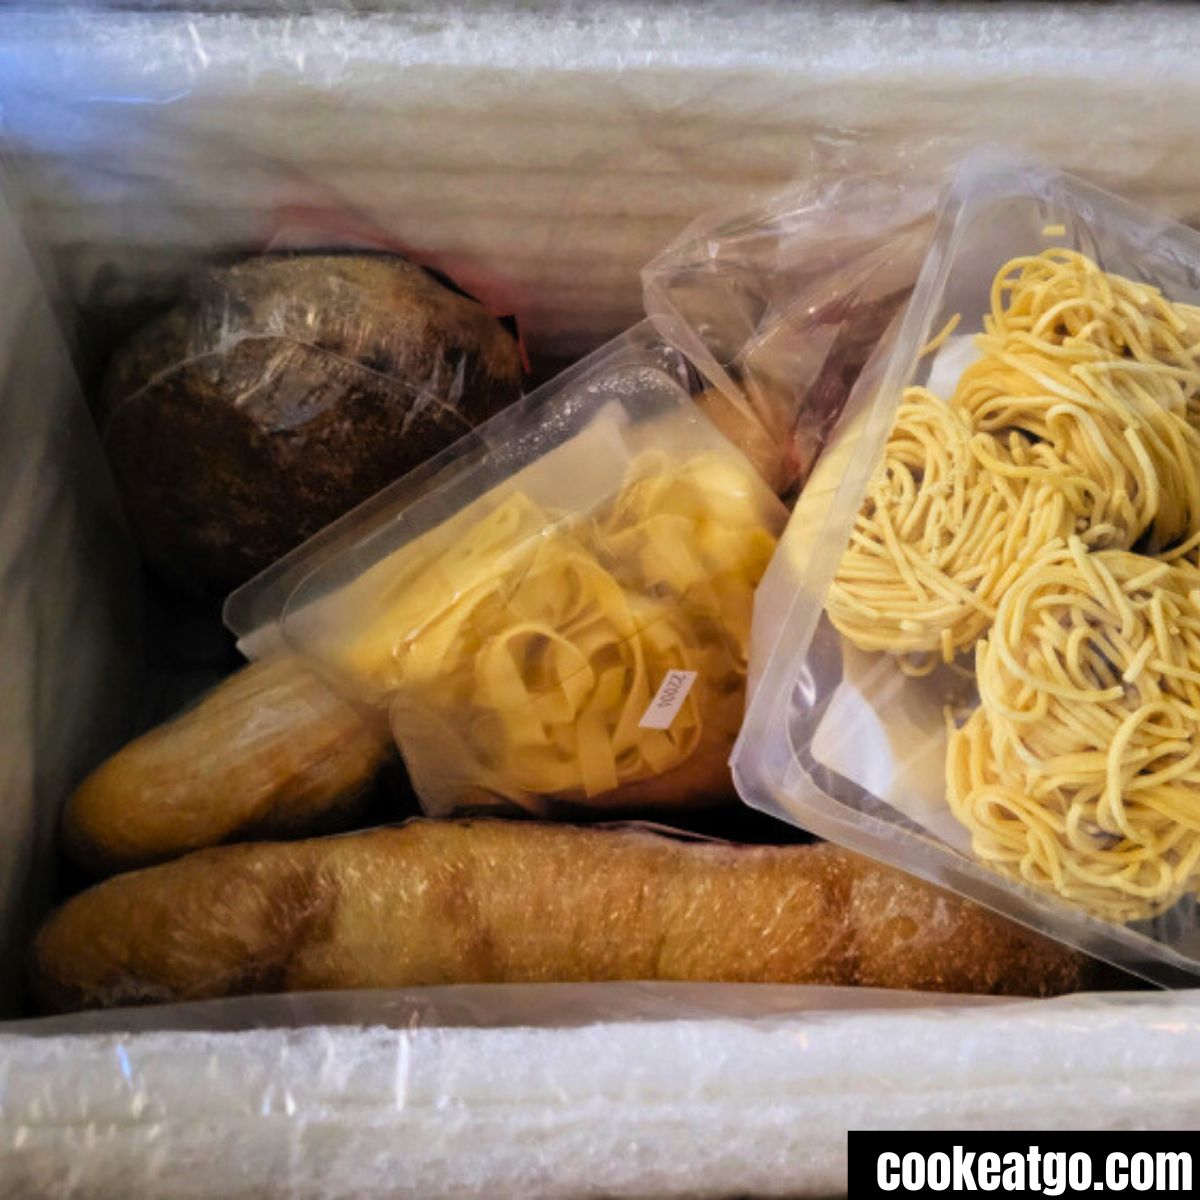 Contents of freezer box of wildgrain bread and pasta 
